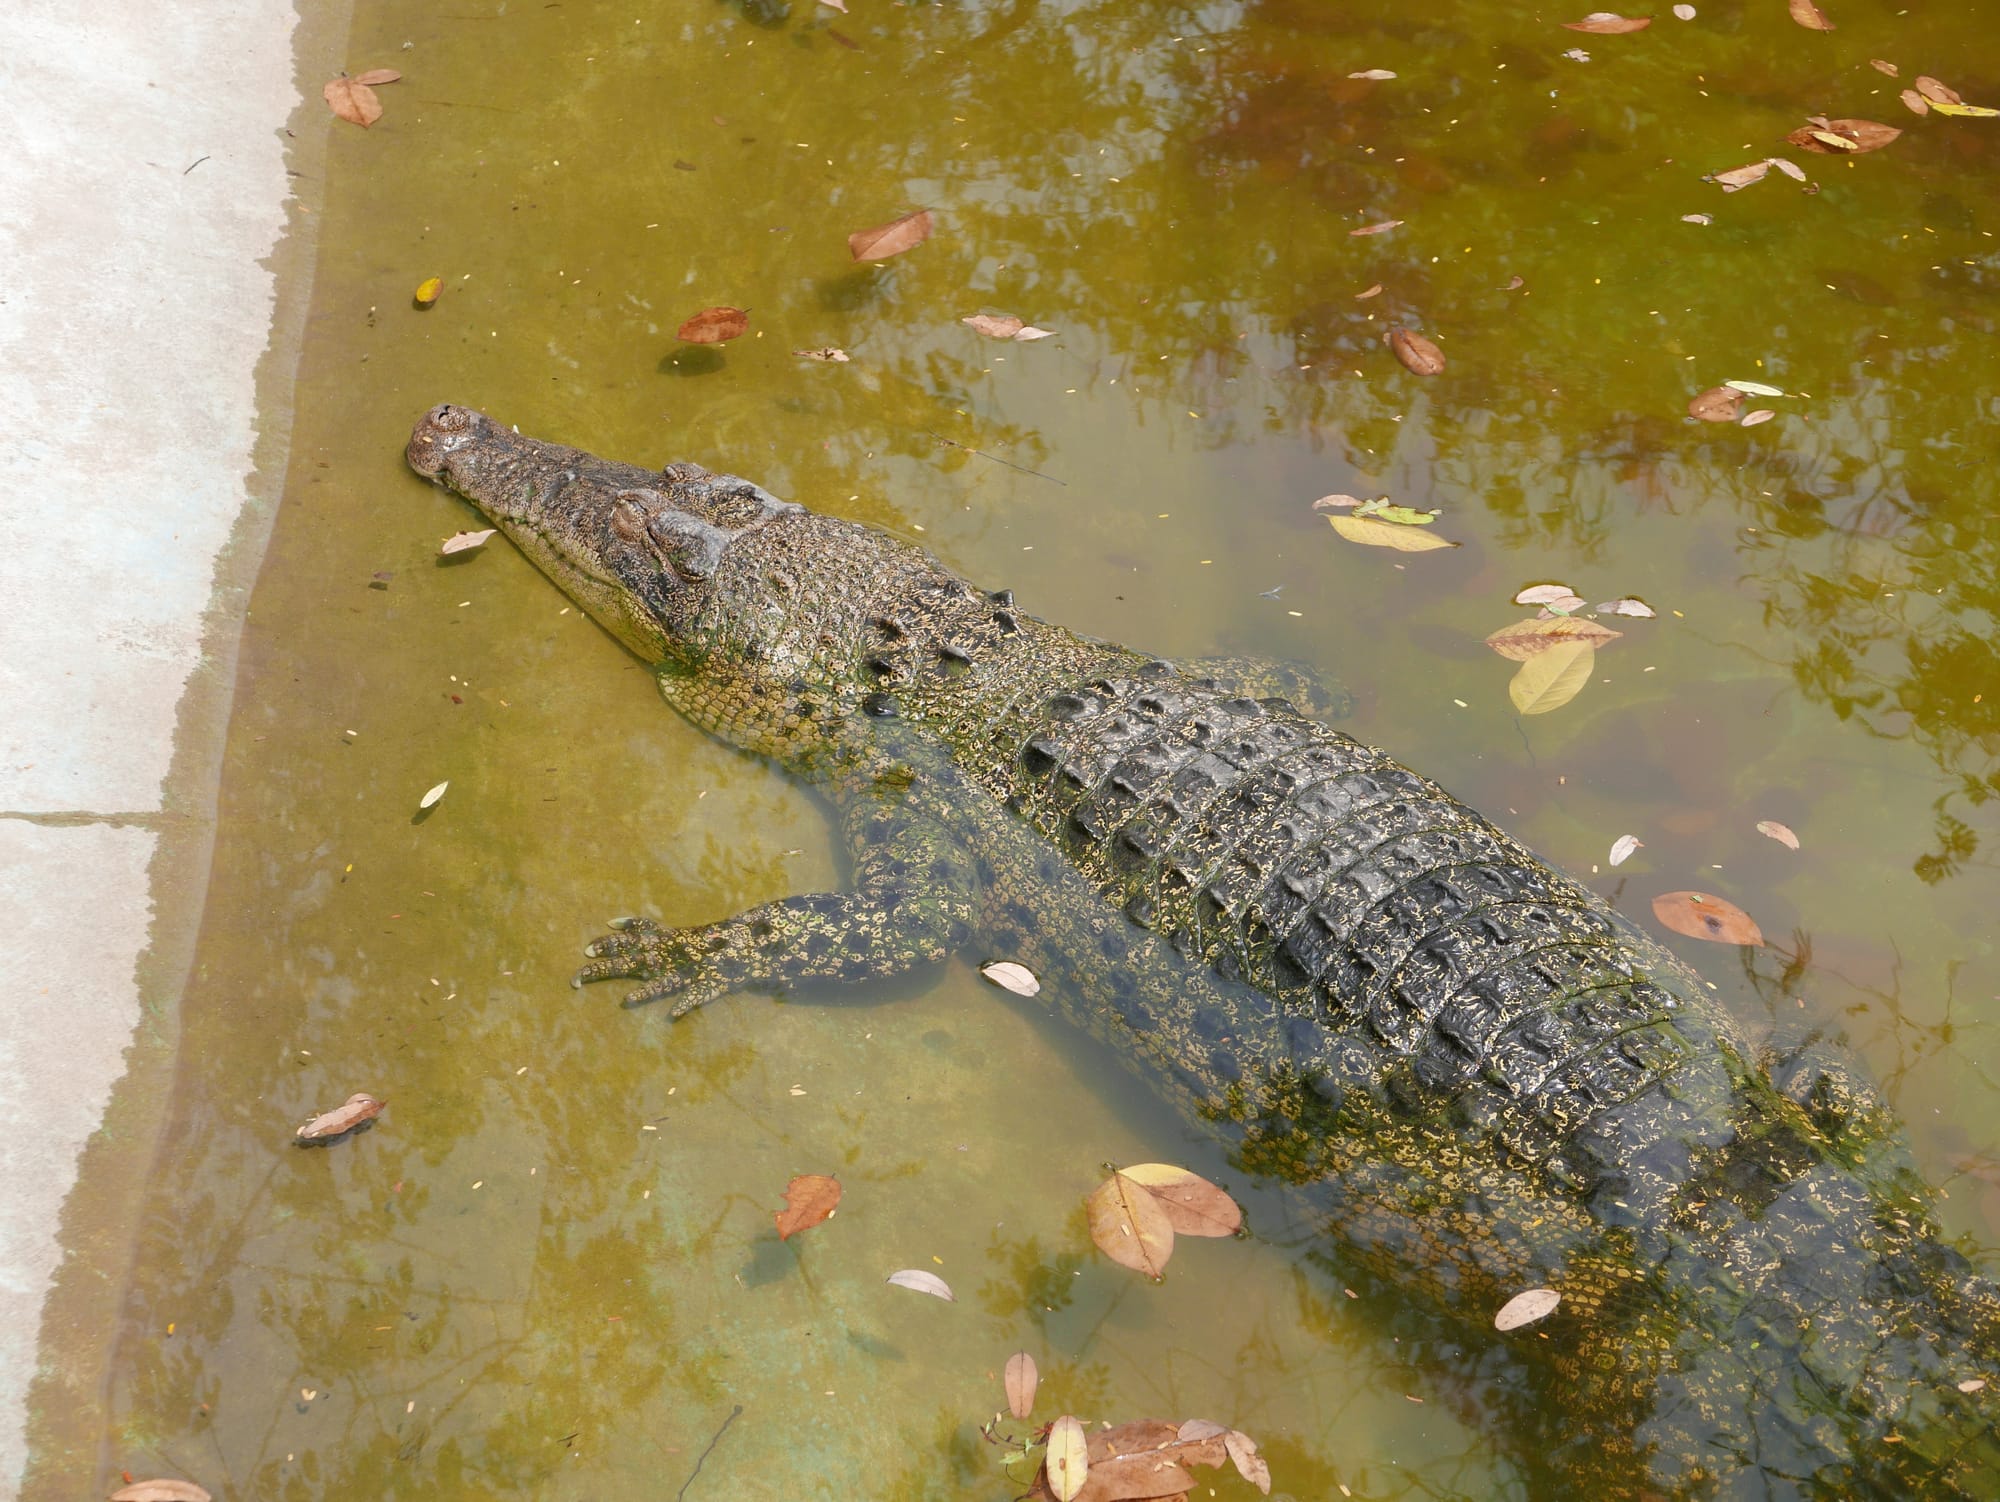 Photo by Author — crocodile at Yadanabon Zoo, Mandalay, Myanmar